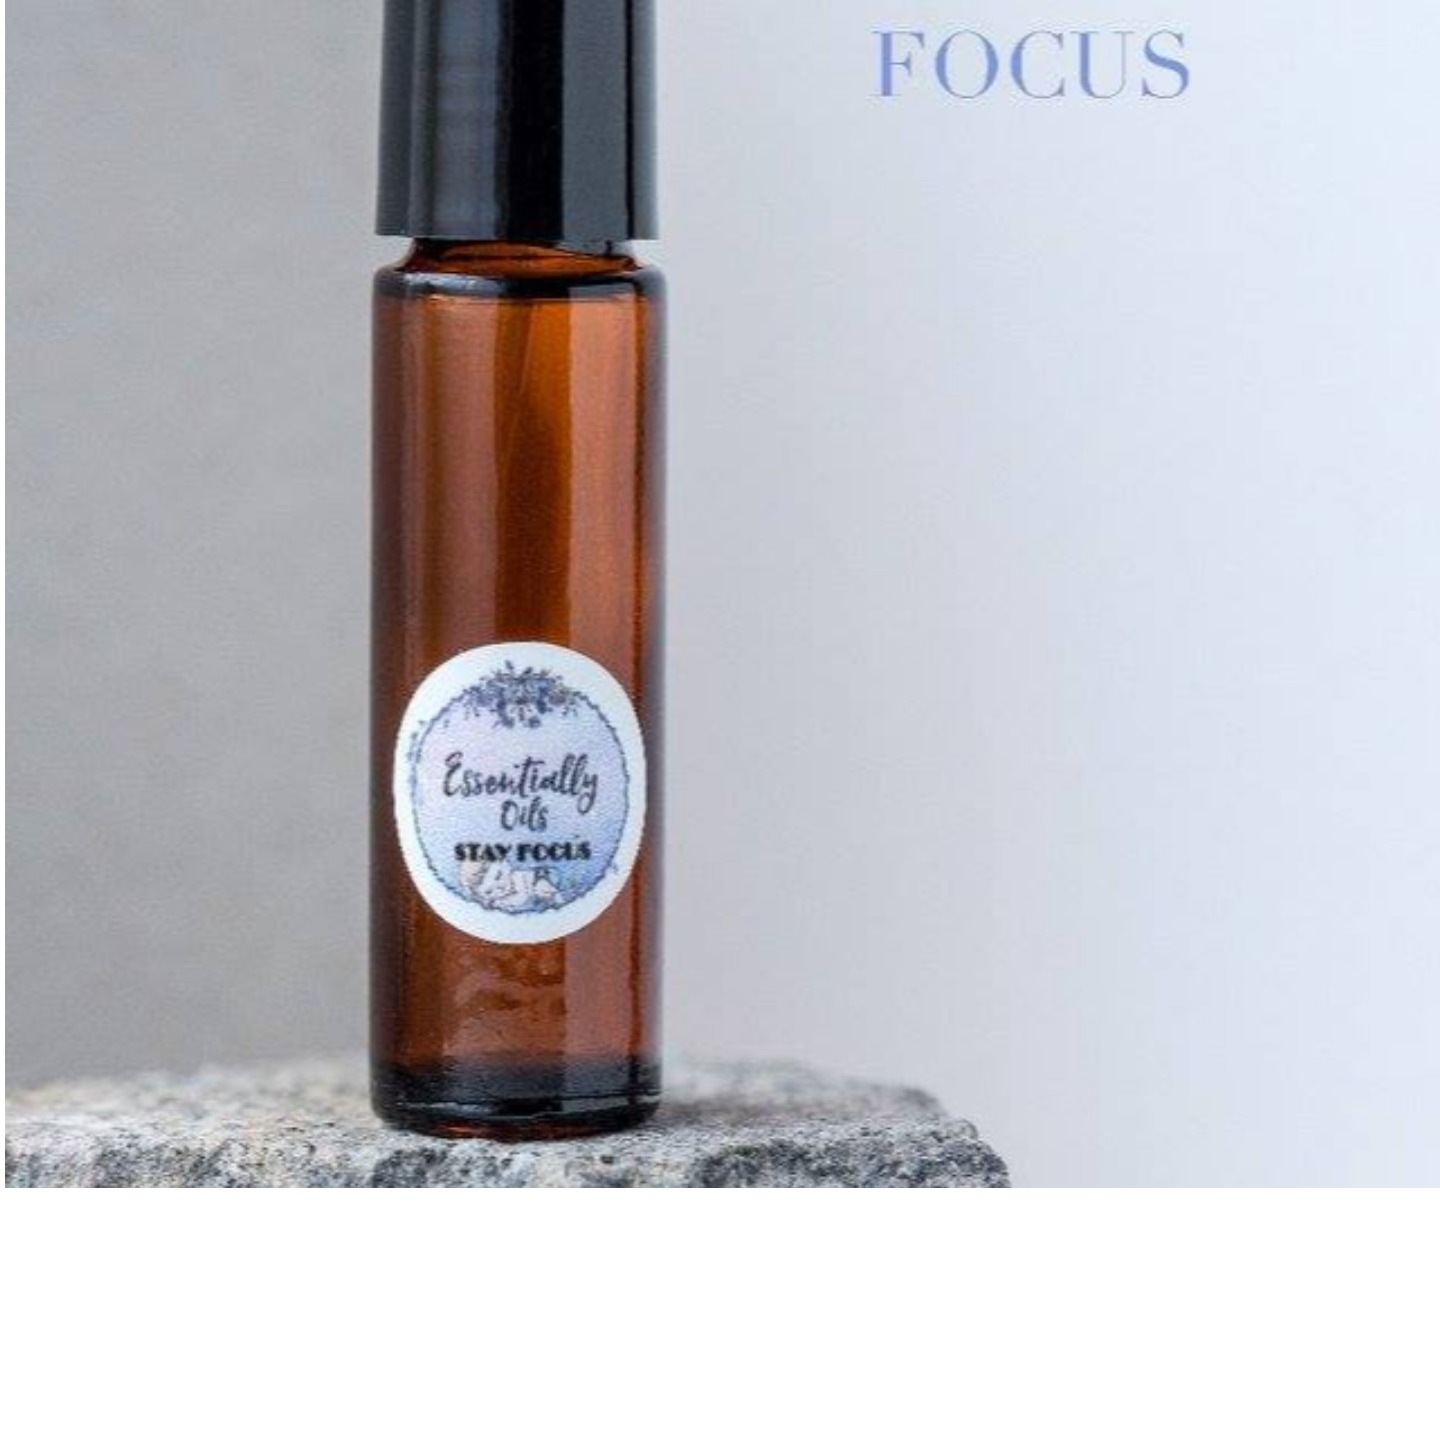 Stay Focus - Focus Oil Blend 15ml